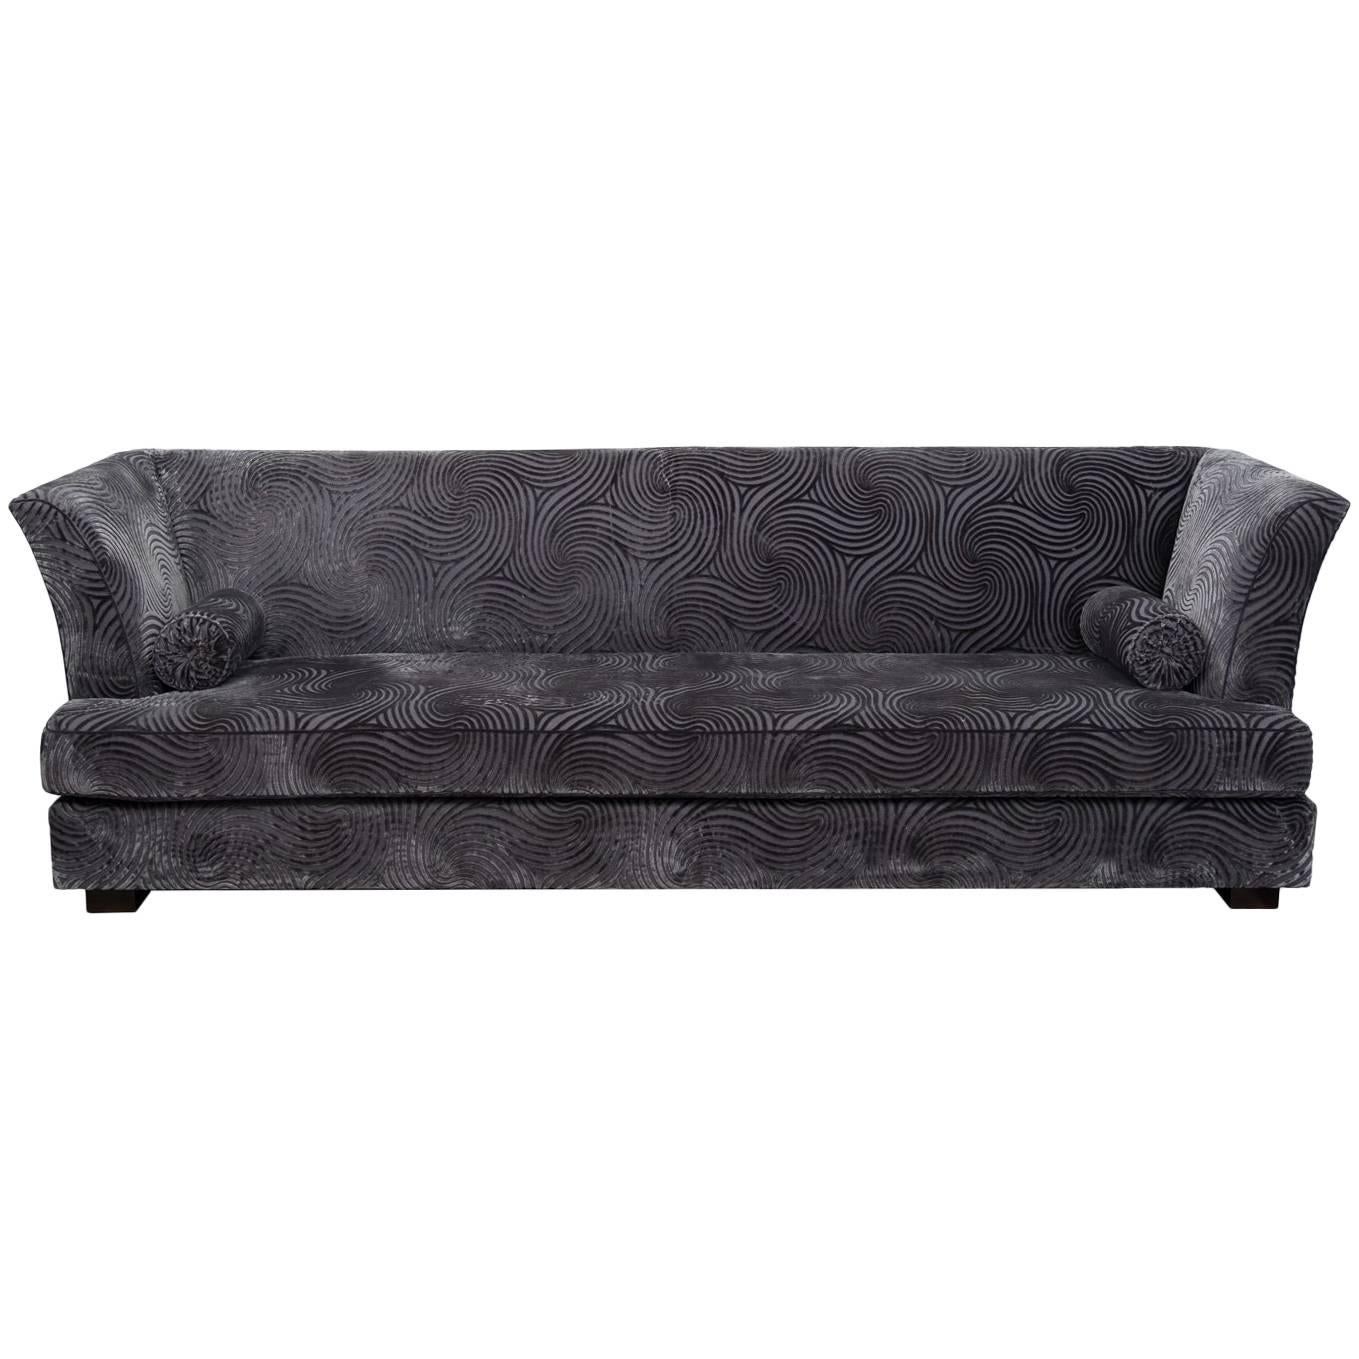 Custom Designer Sofa For Sale